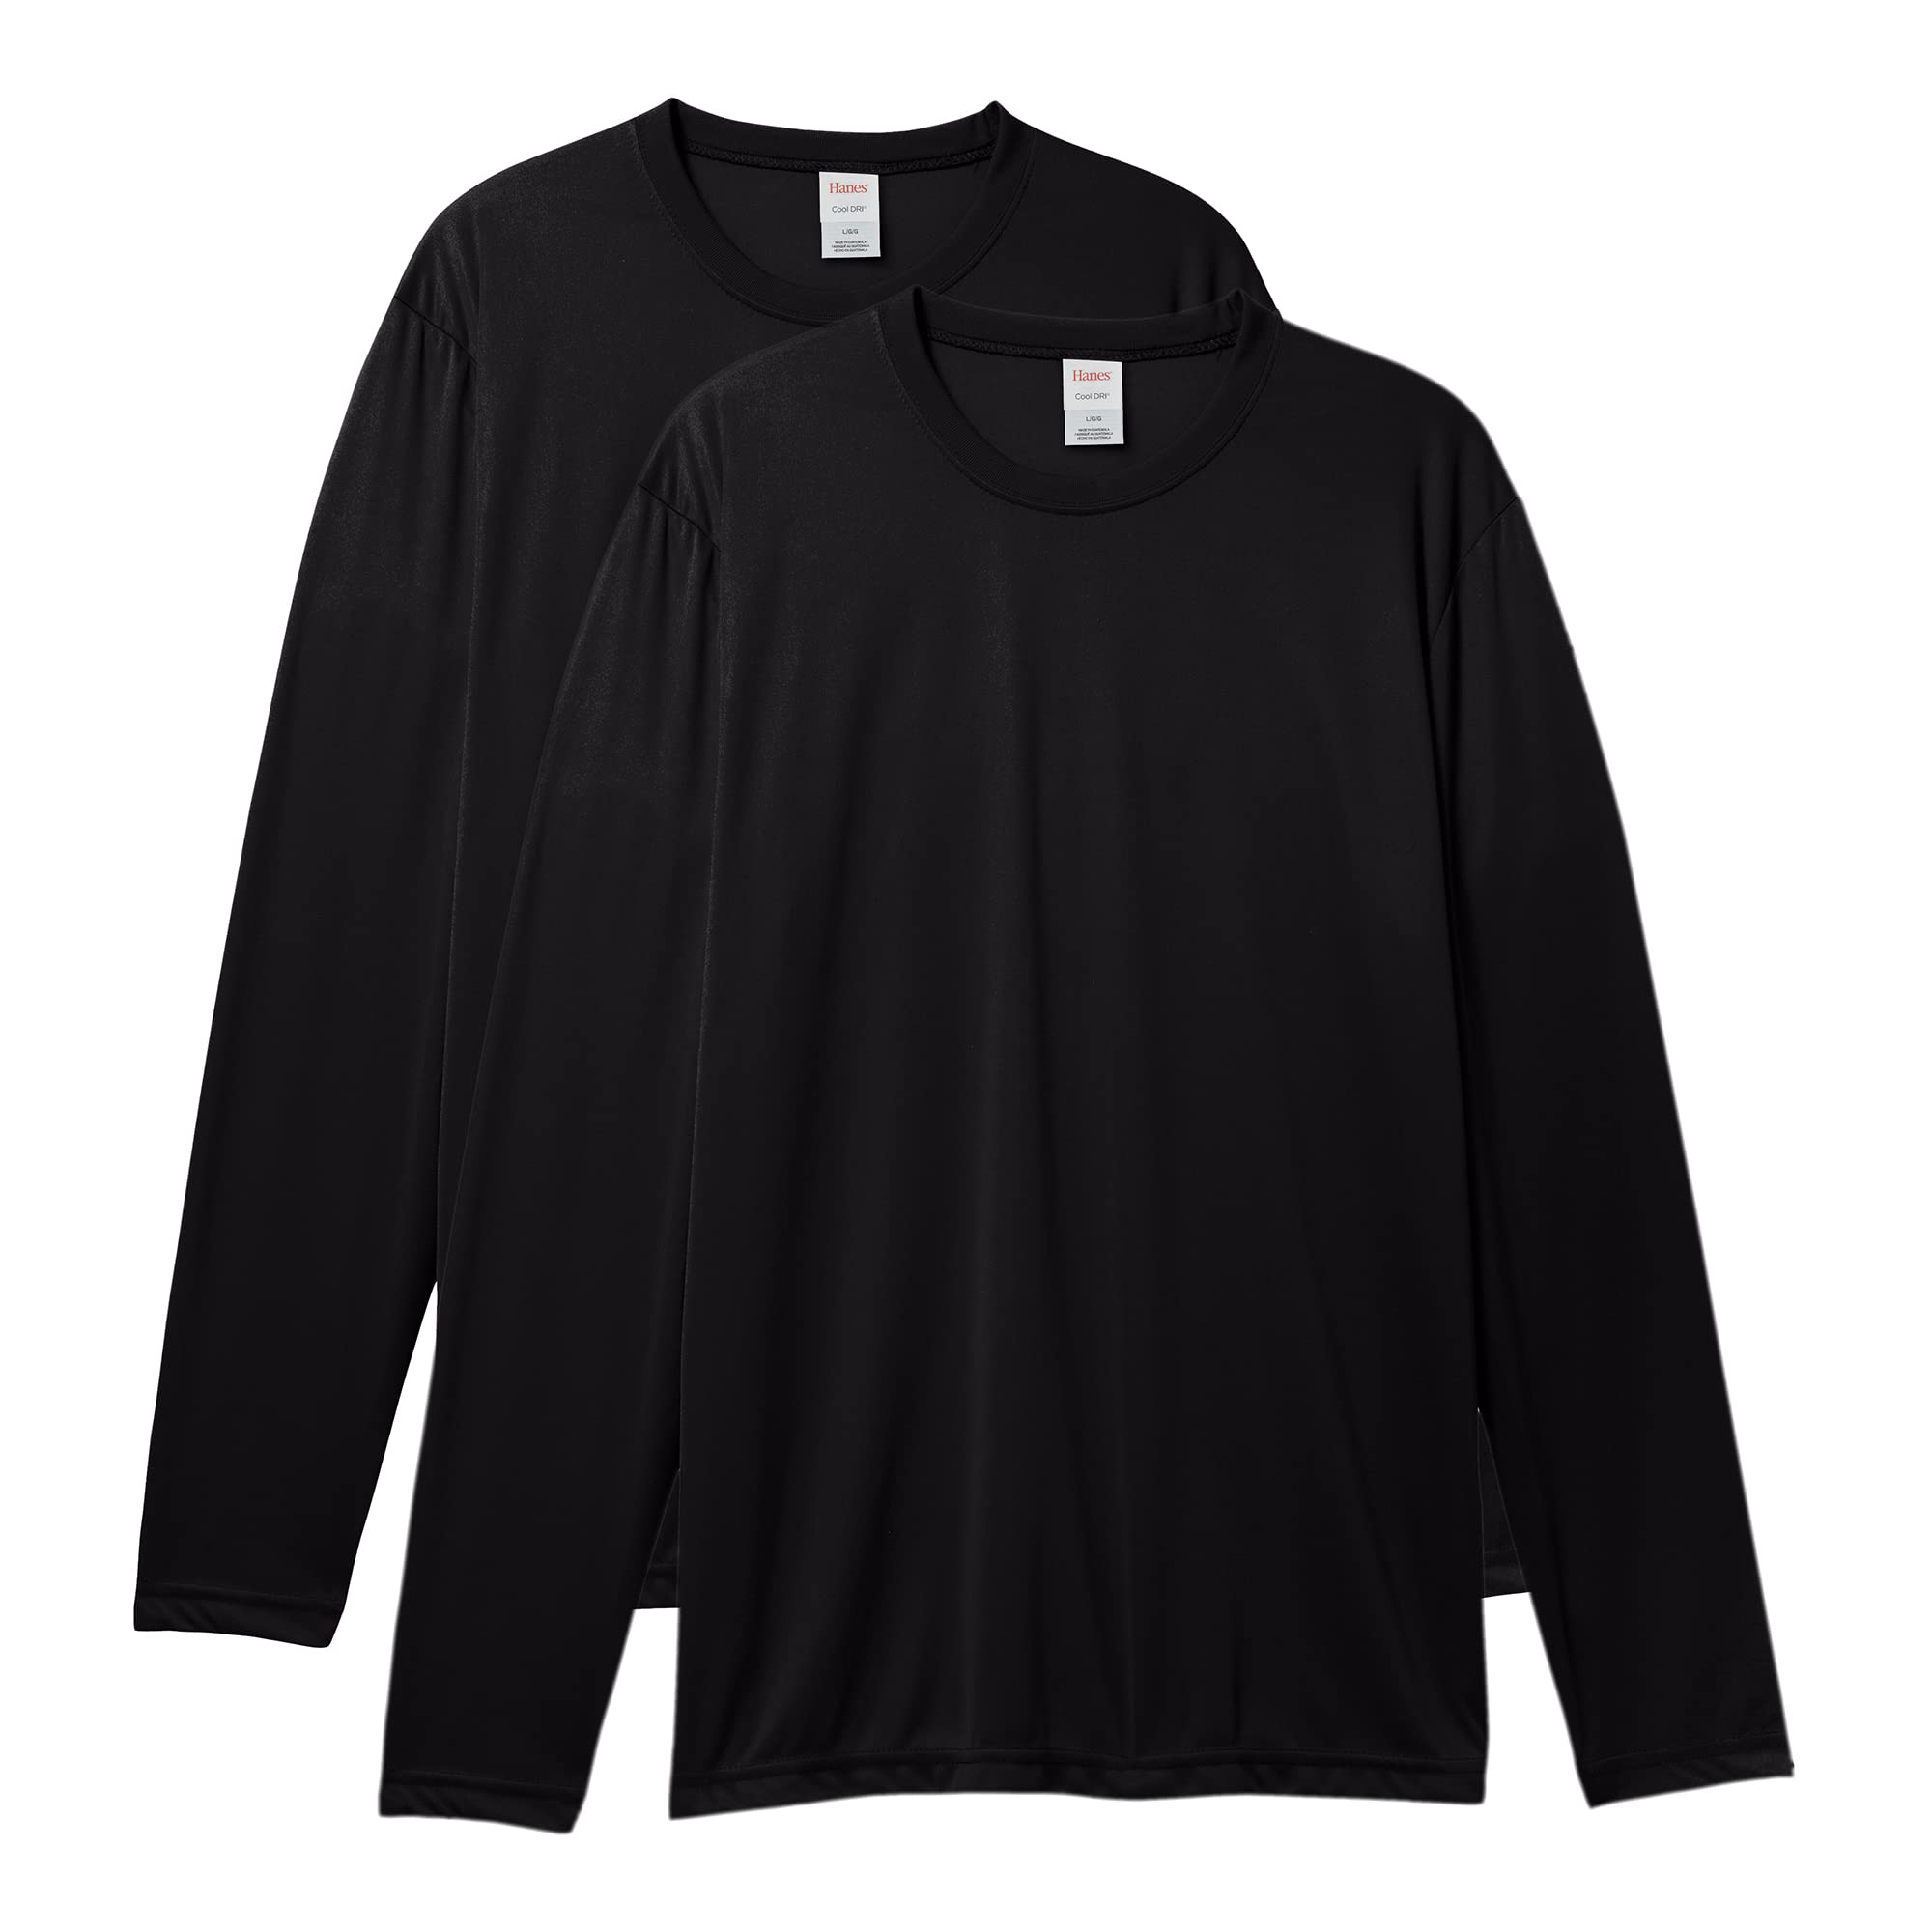 Hanes Men's Long-Sleeve Pack, Cool Dri Moisture-Wicking T-Shirts, Performance Tee, 2-Pack